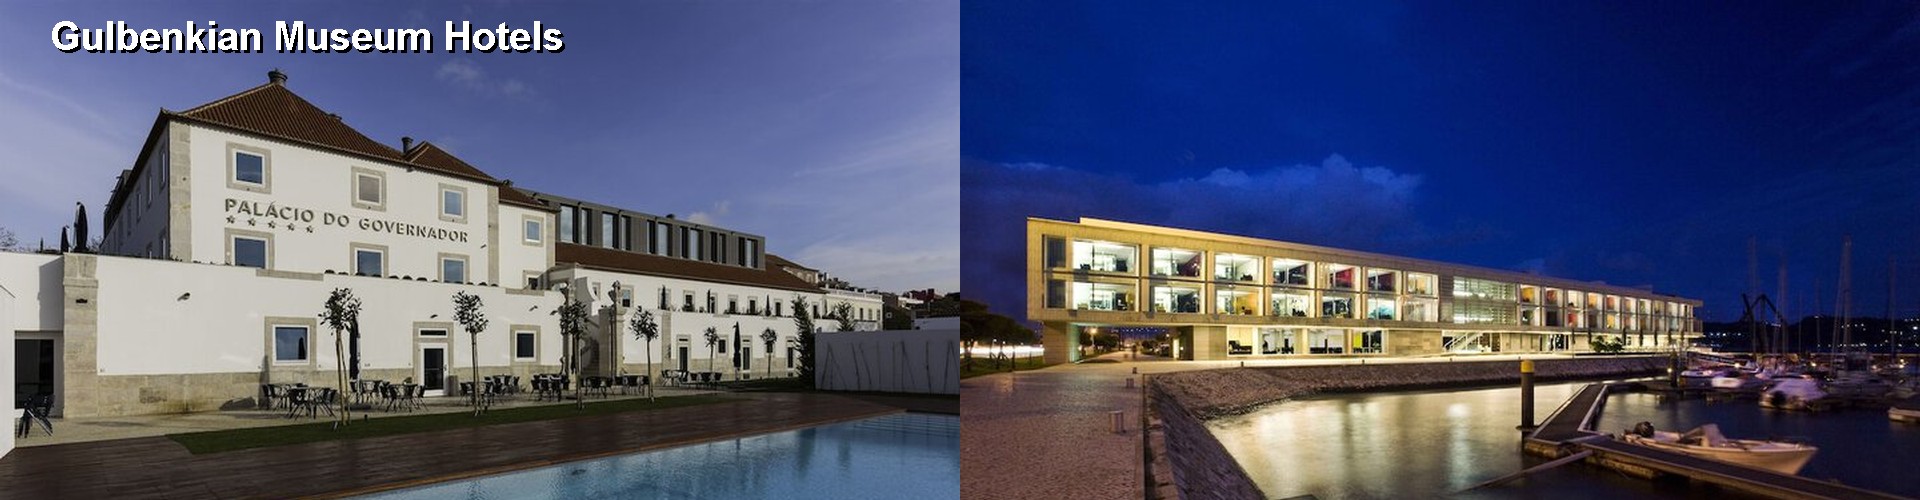 5 Best Hotels near Gulbenkian Museum